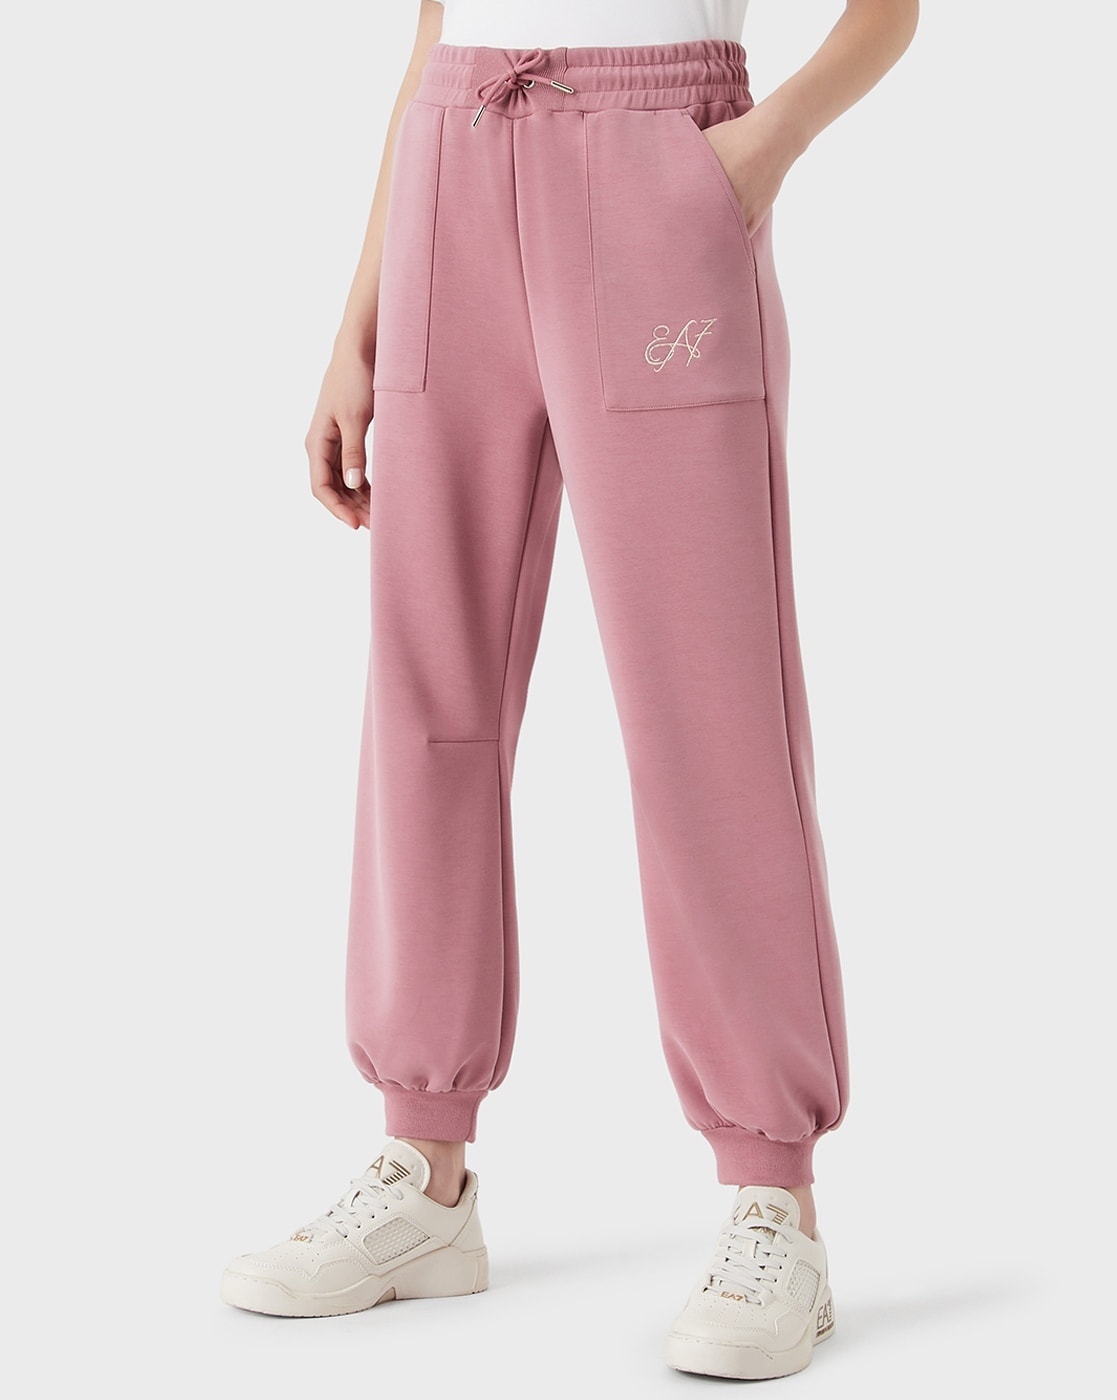 EA7 Emporio Armani Leggings - Trousers - pink/white/pink 